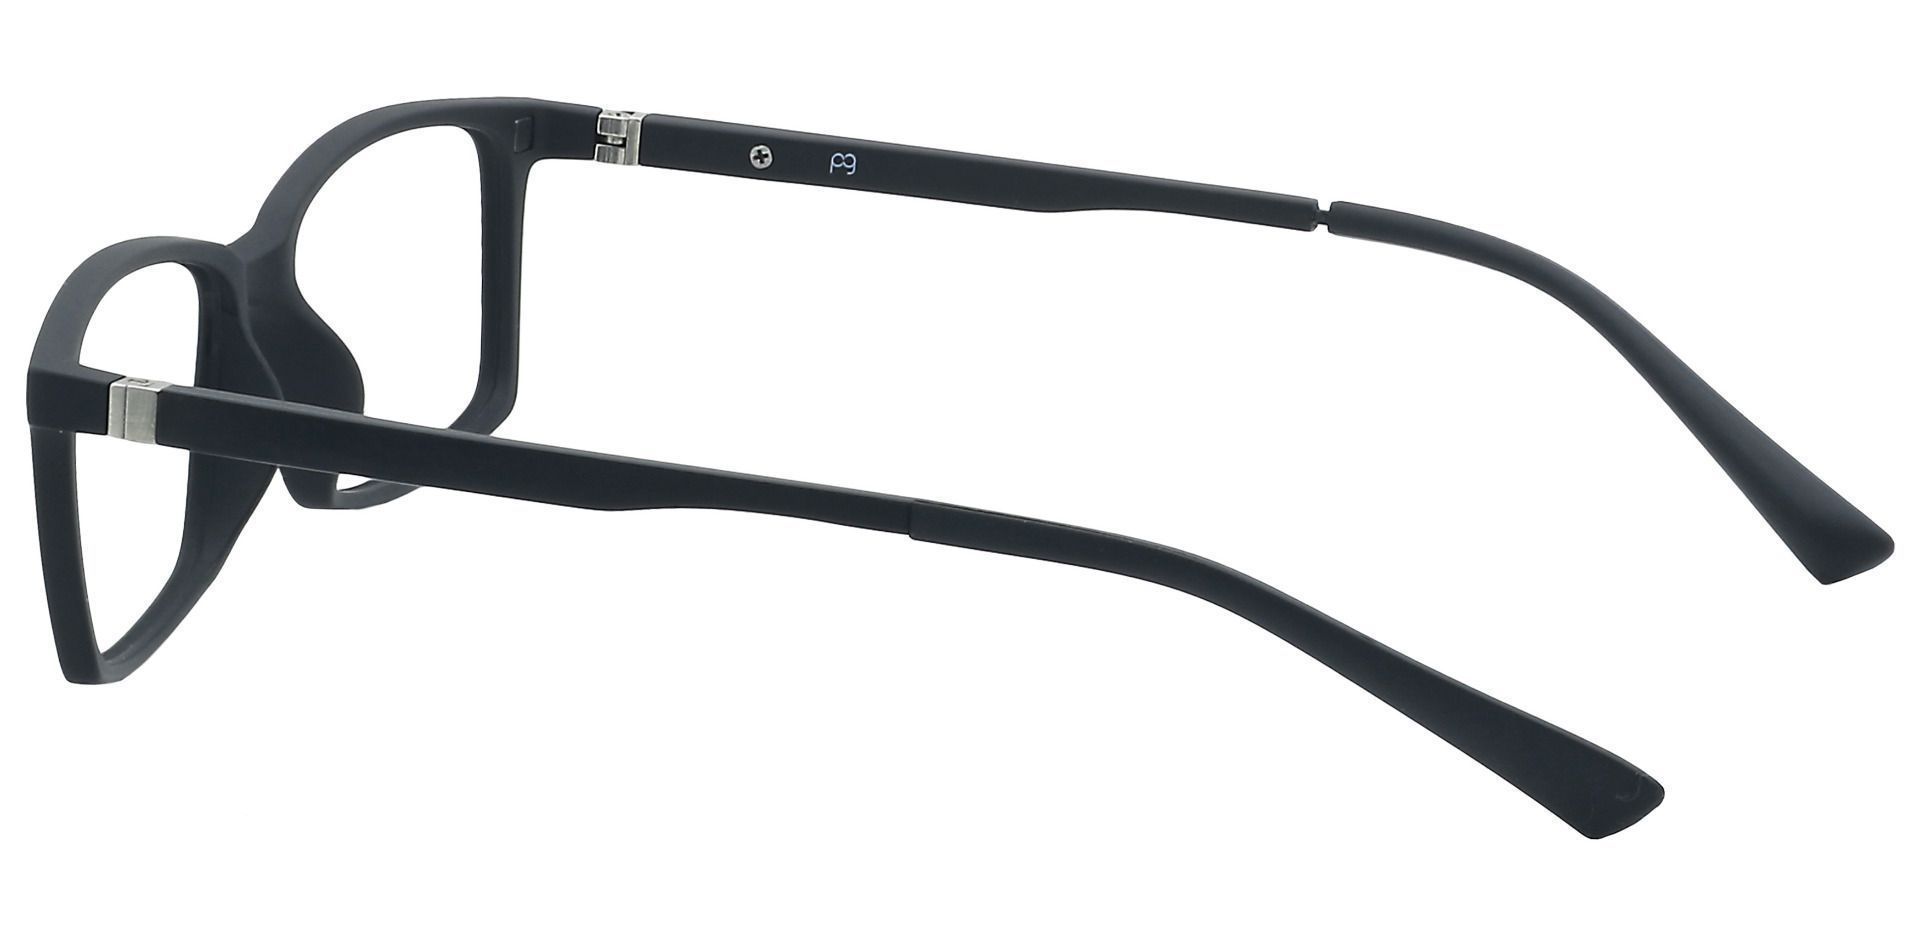 Tahoe Rectangle Eyeglasses Frame - Black